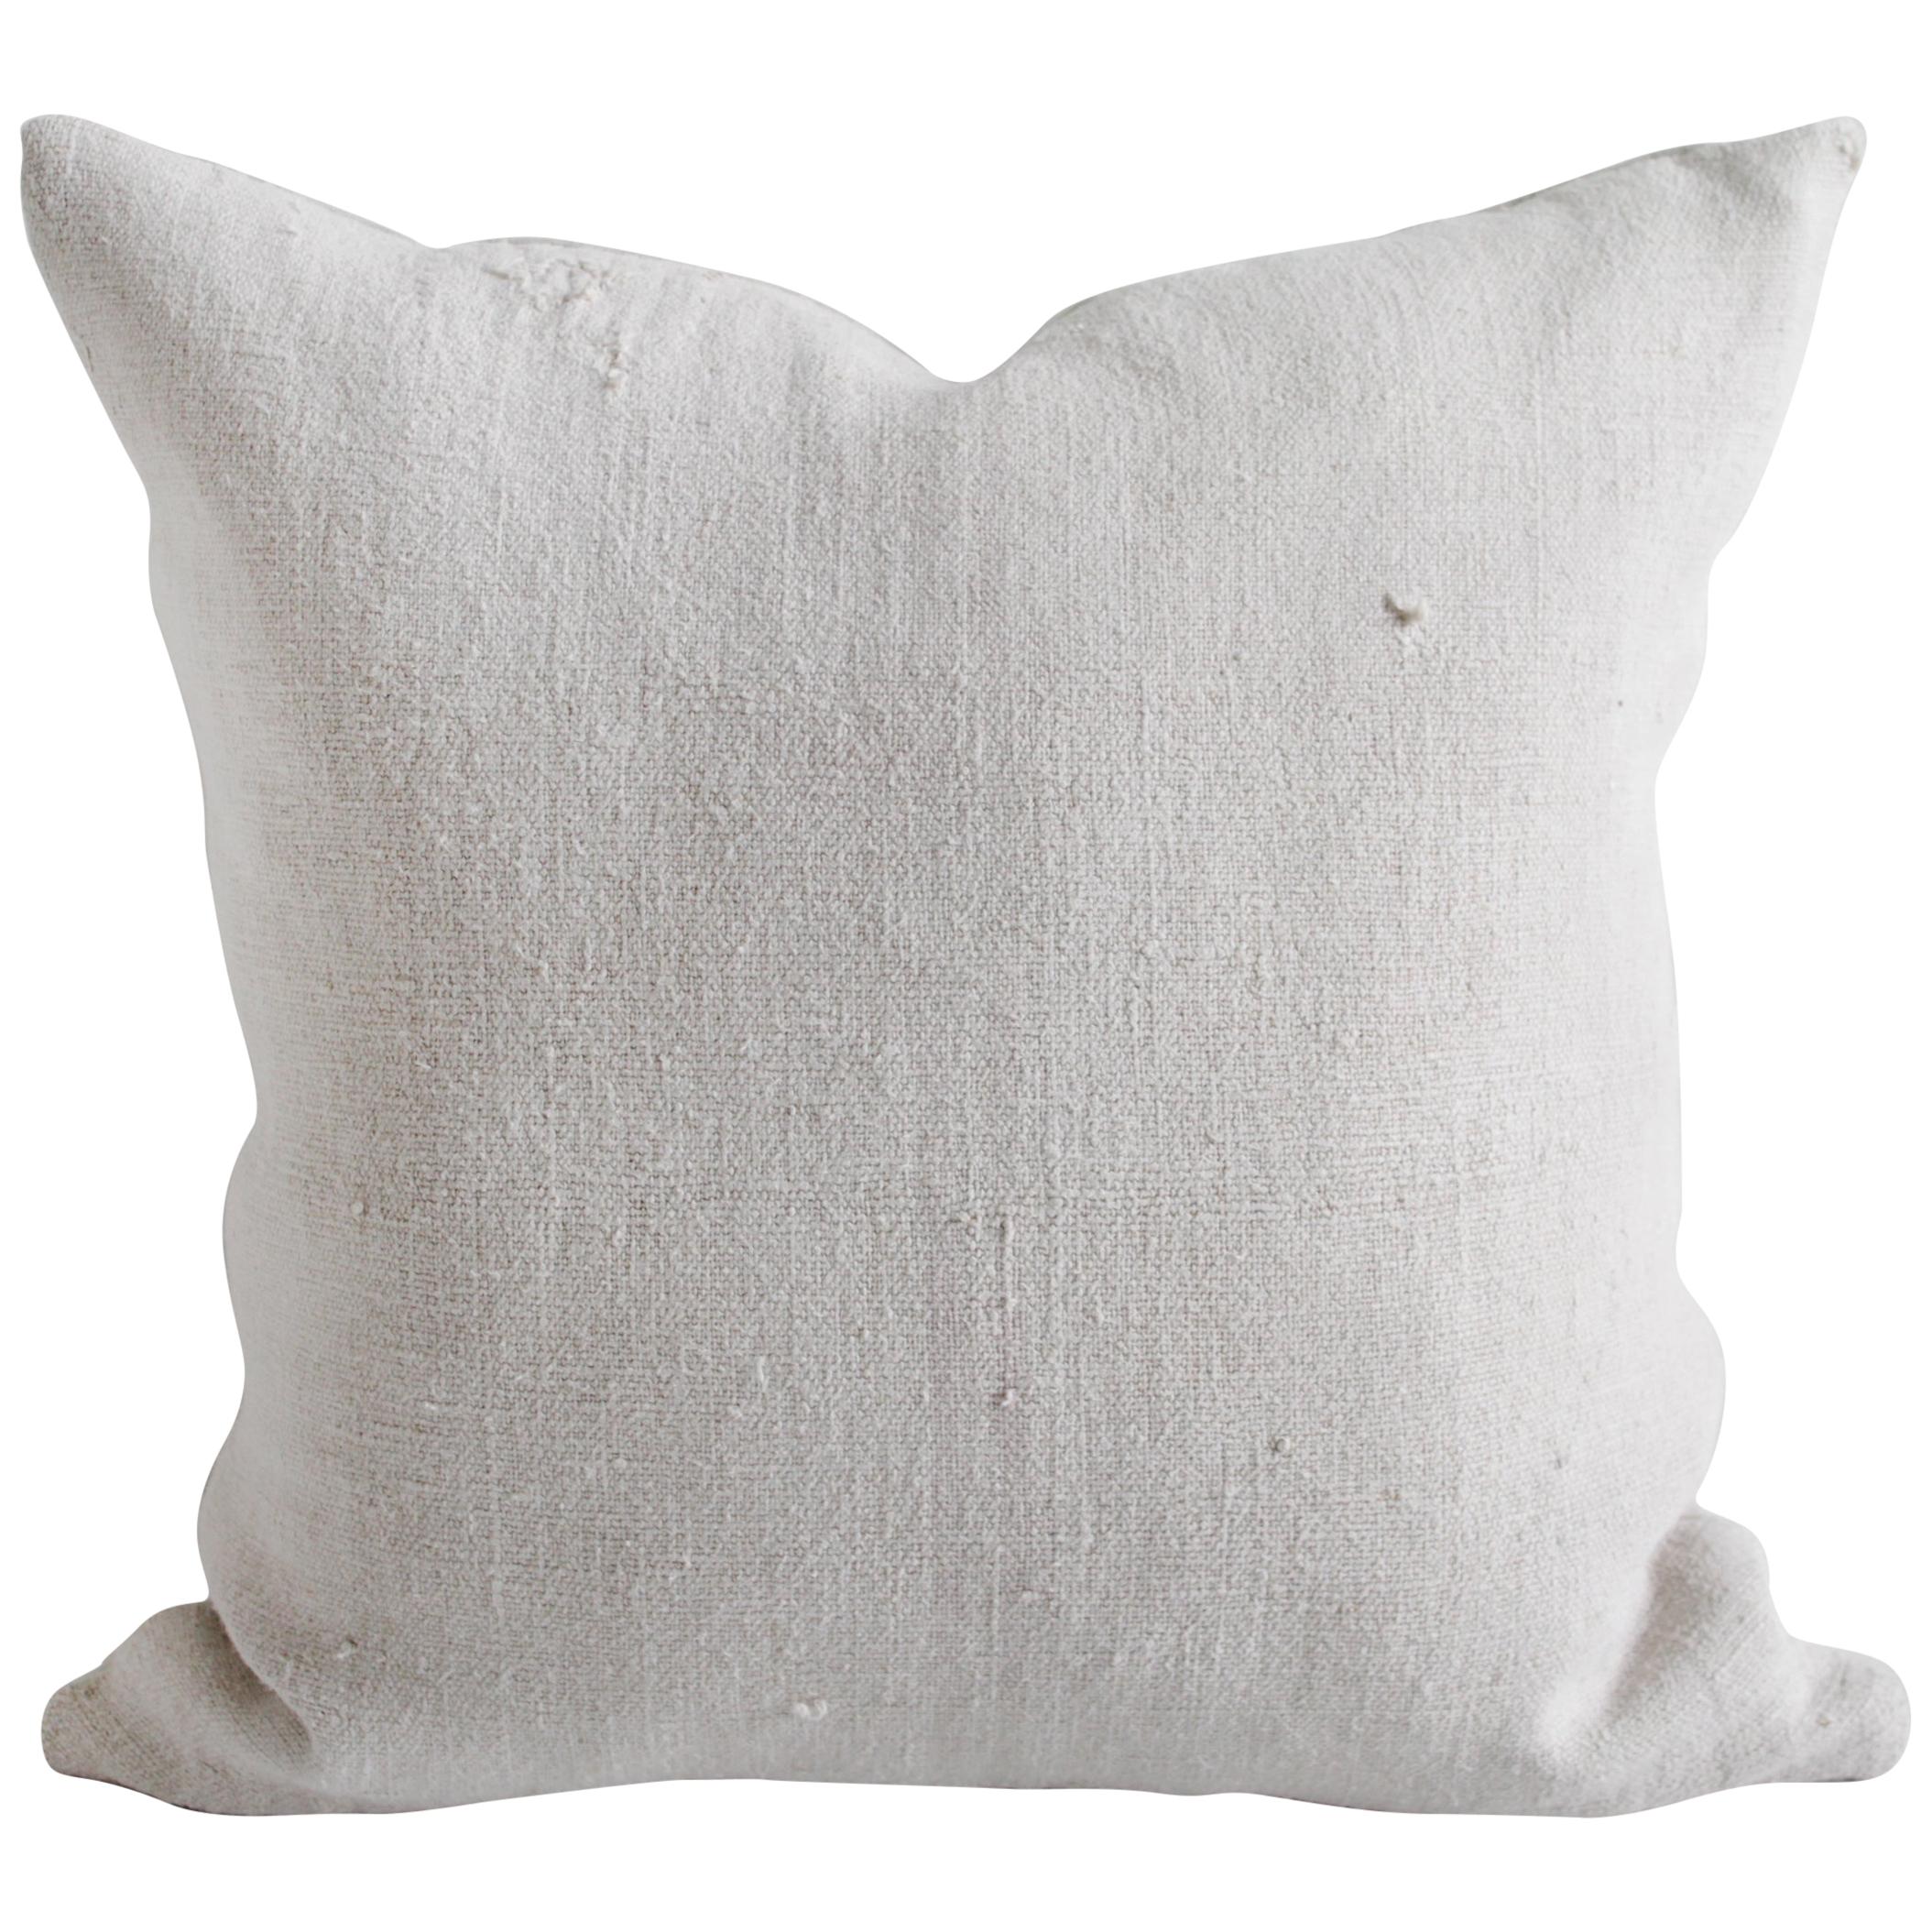 Vintage European Grain Sack Hemp Pillow with Pale Pink Stripes For Sale